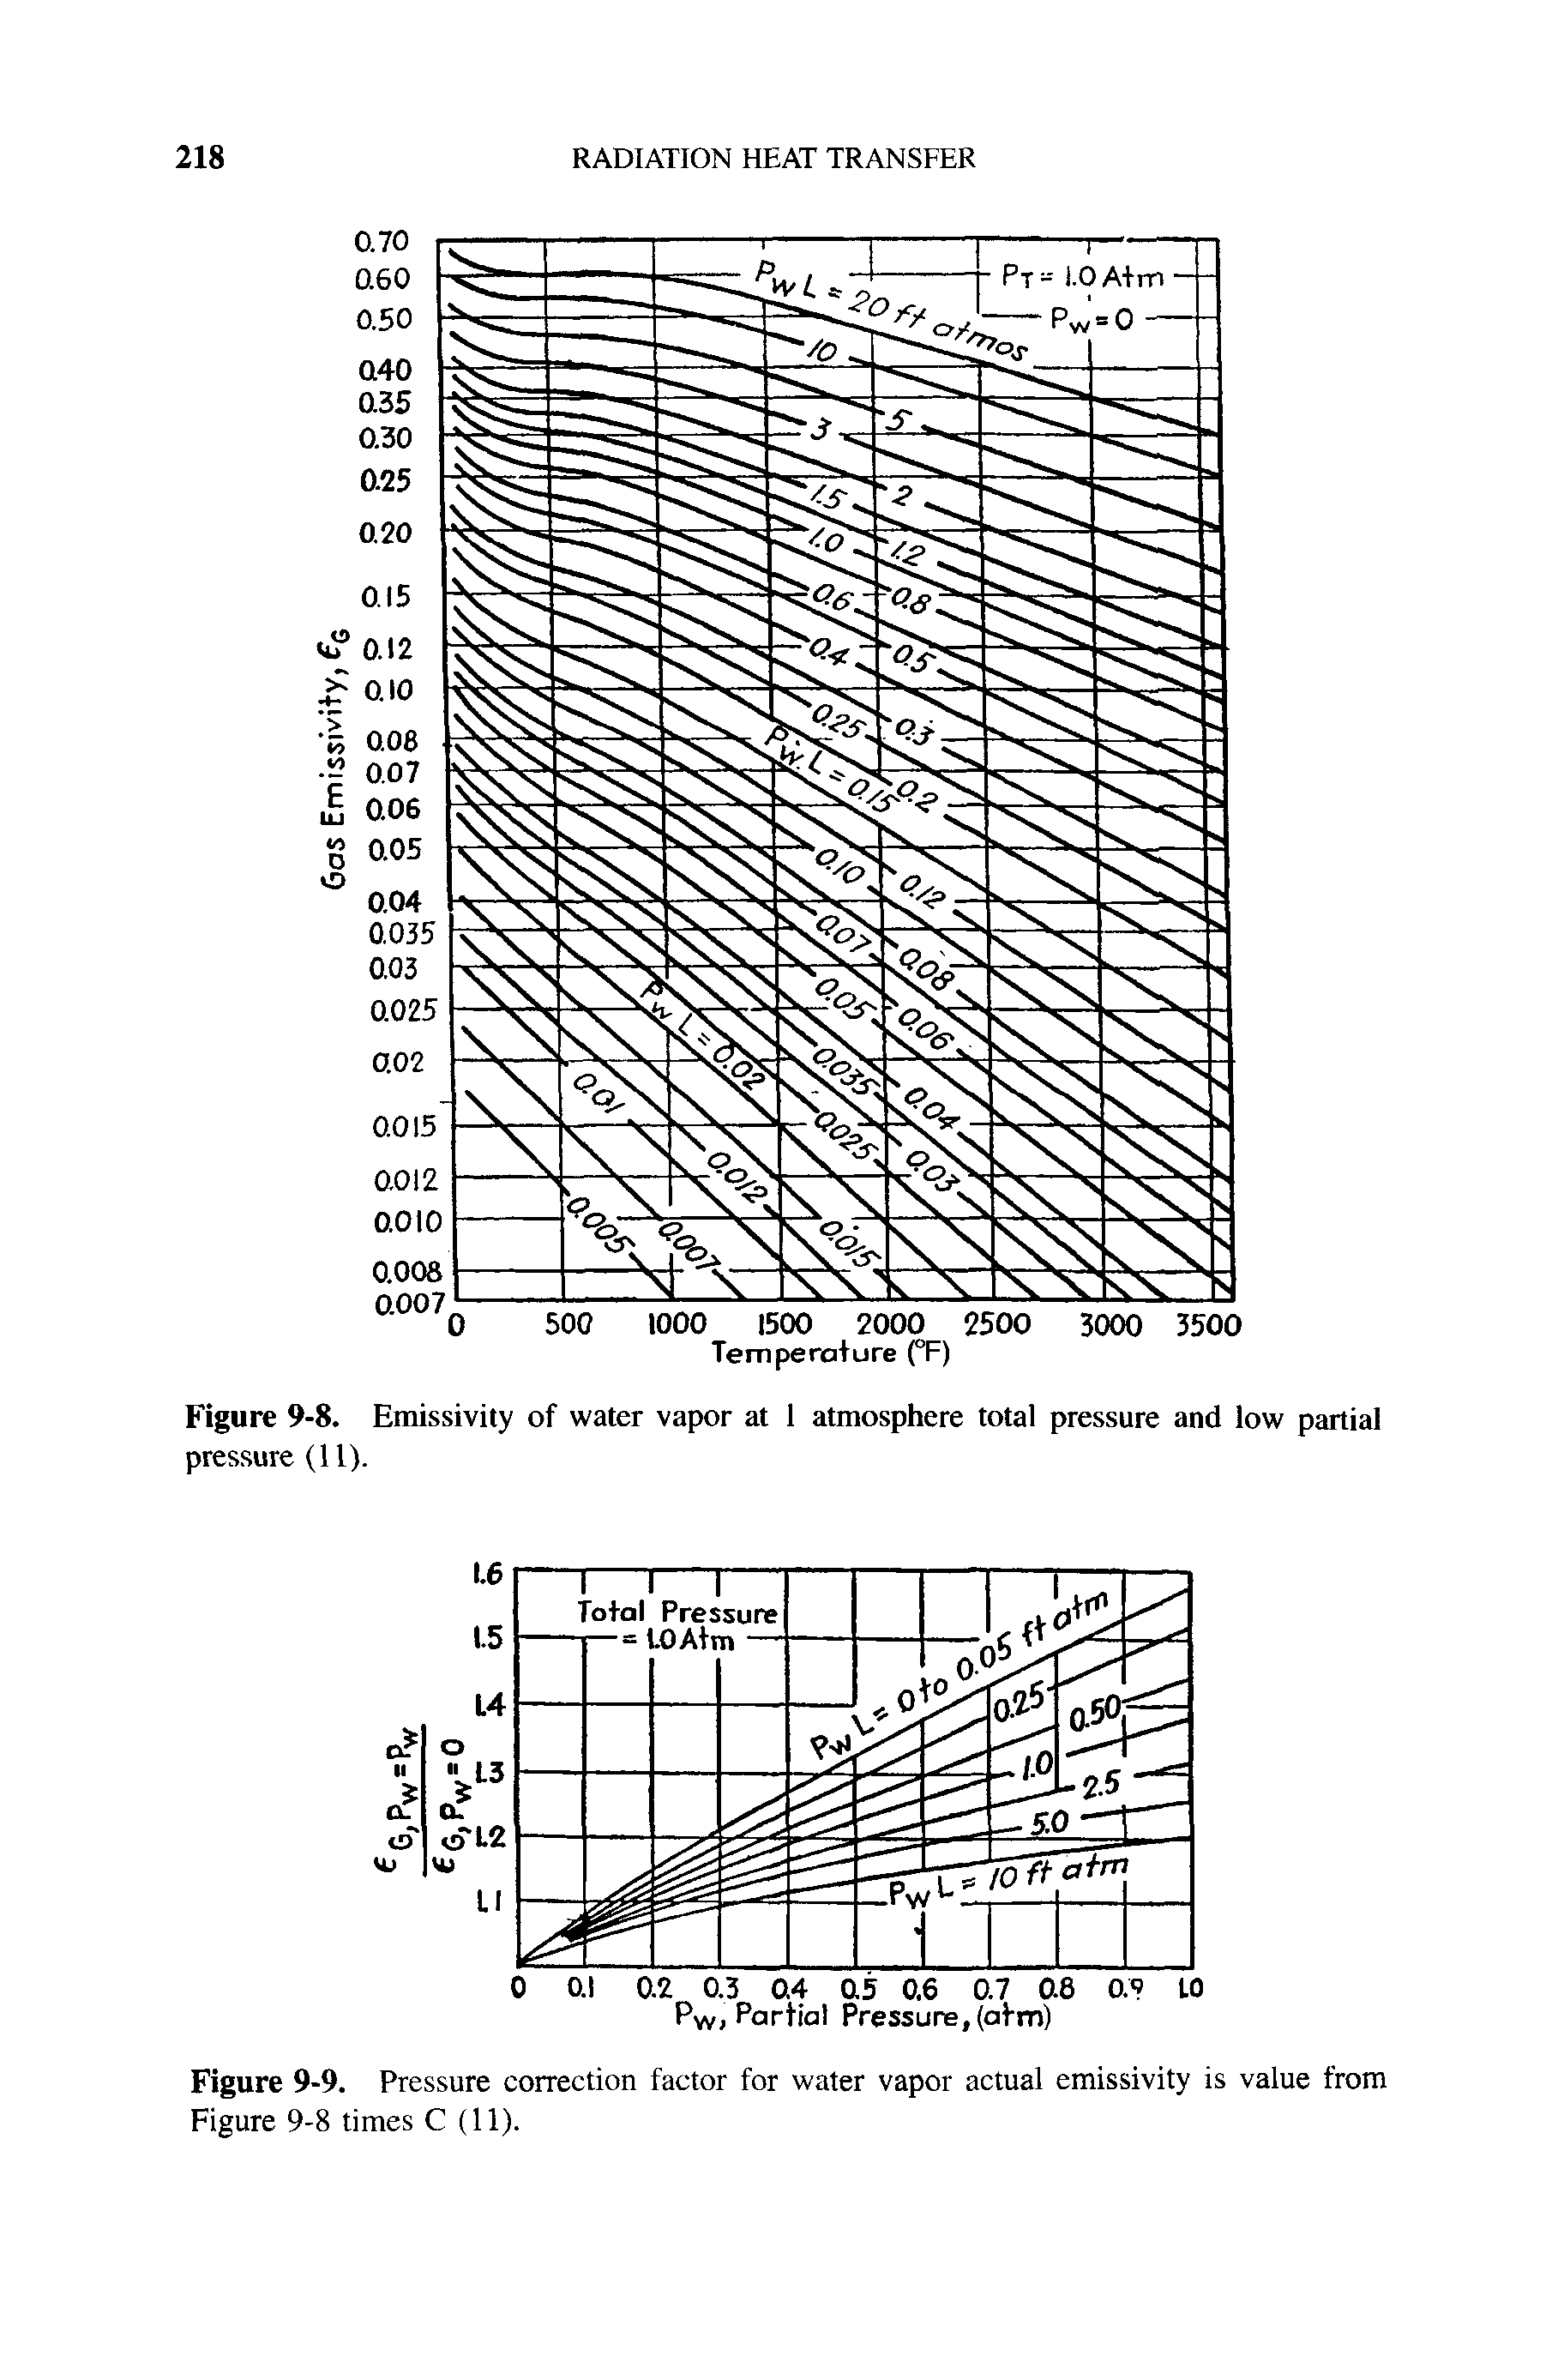 Figure 9-8. Emissivity of water vapor at 1 atmosphere total pressure and low partial pressure (11).